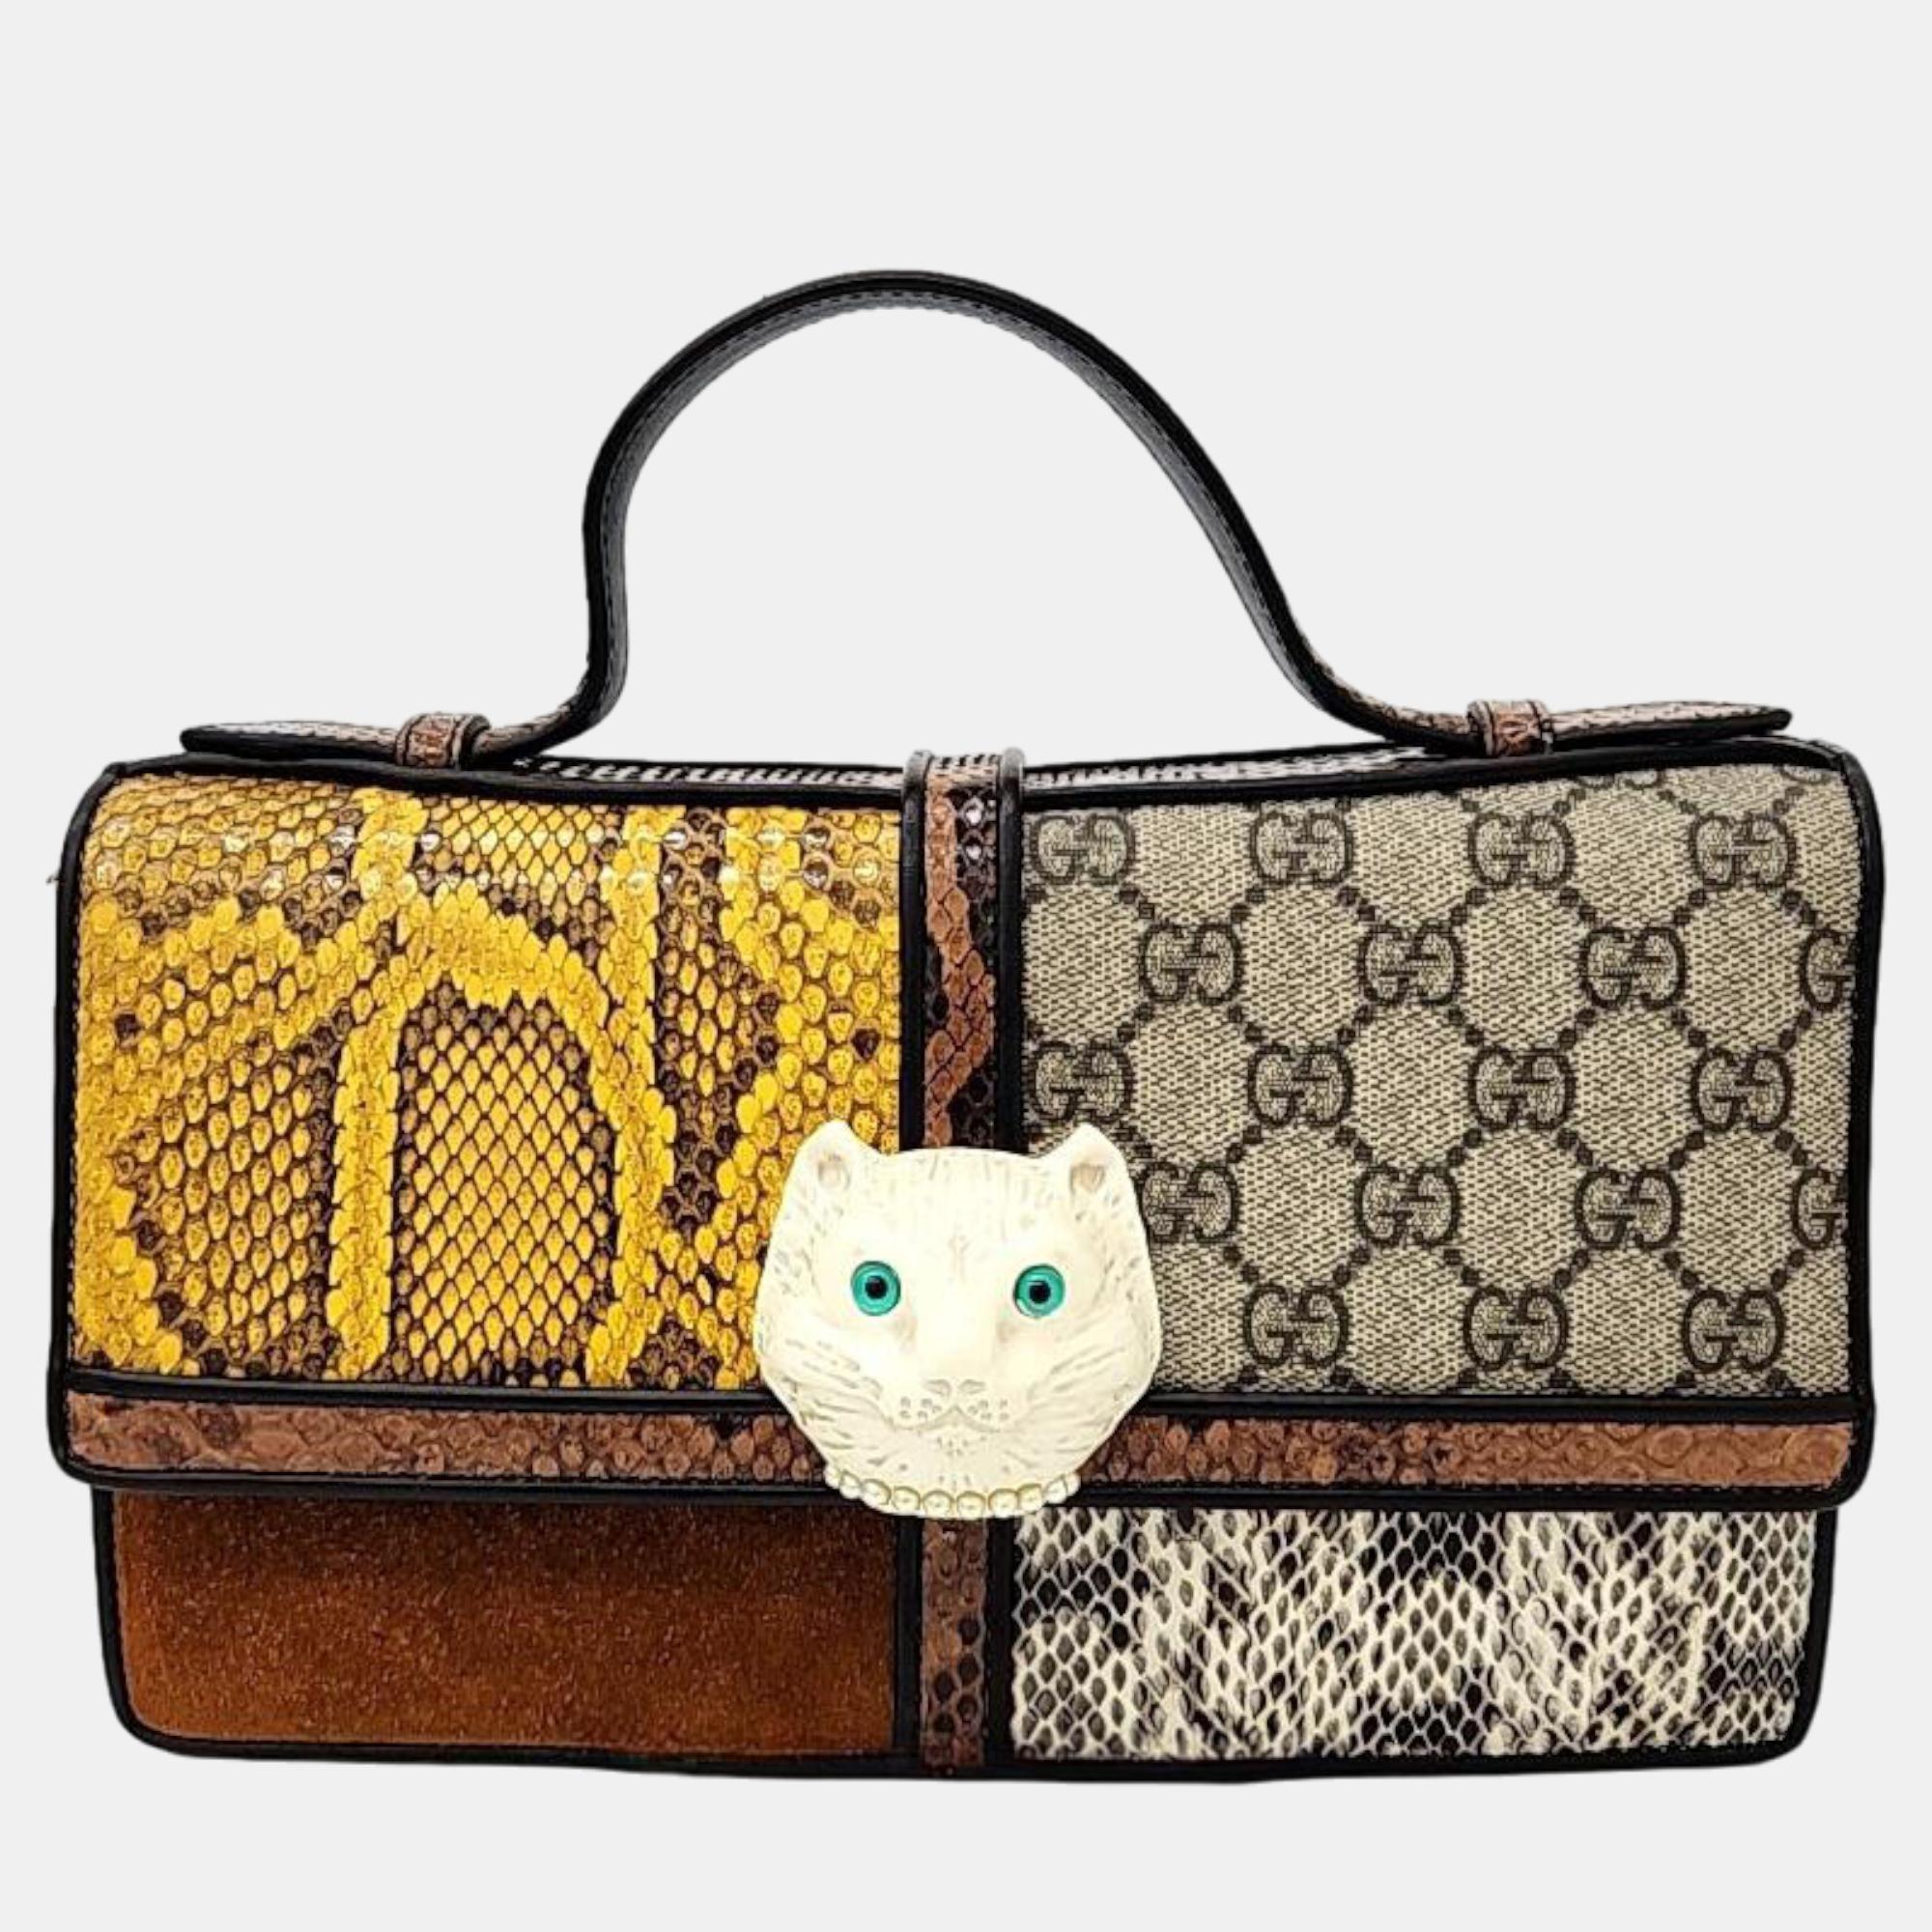 Gucci Multicolor Patchwork Top Handle Tote And Shoulder Bag (499822)